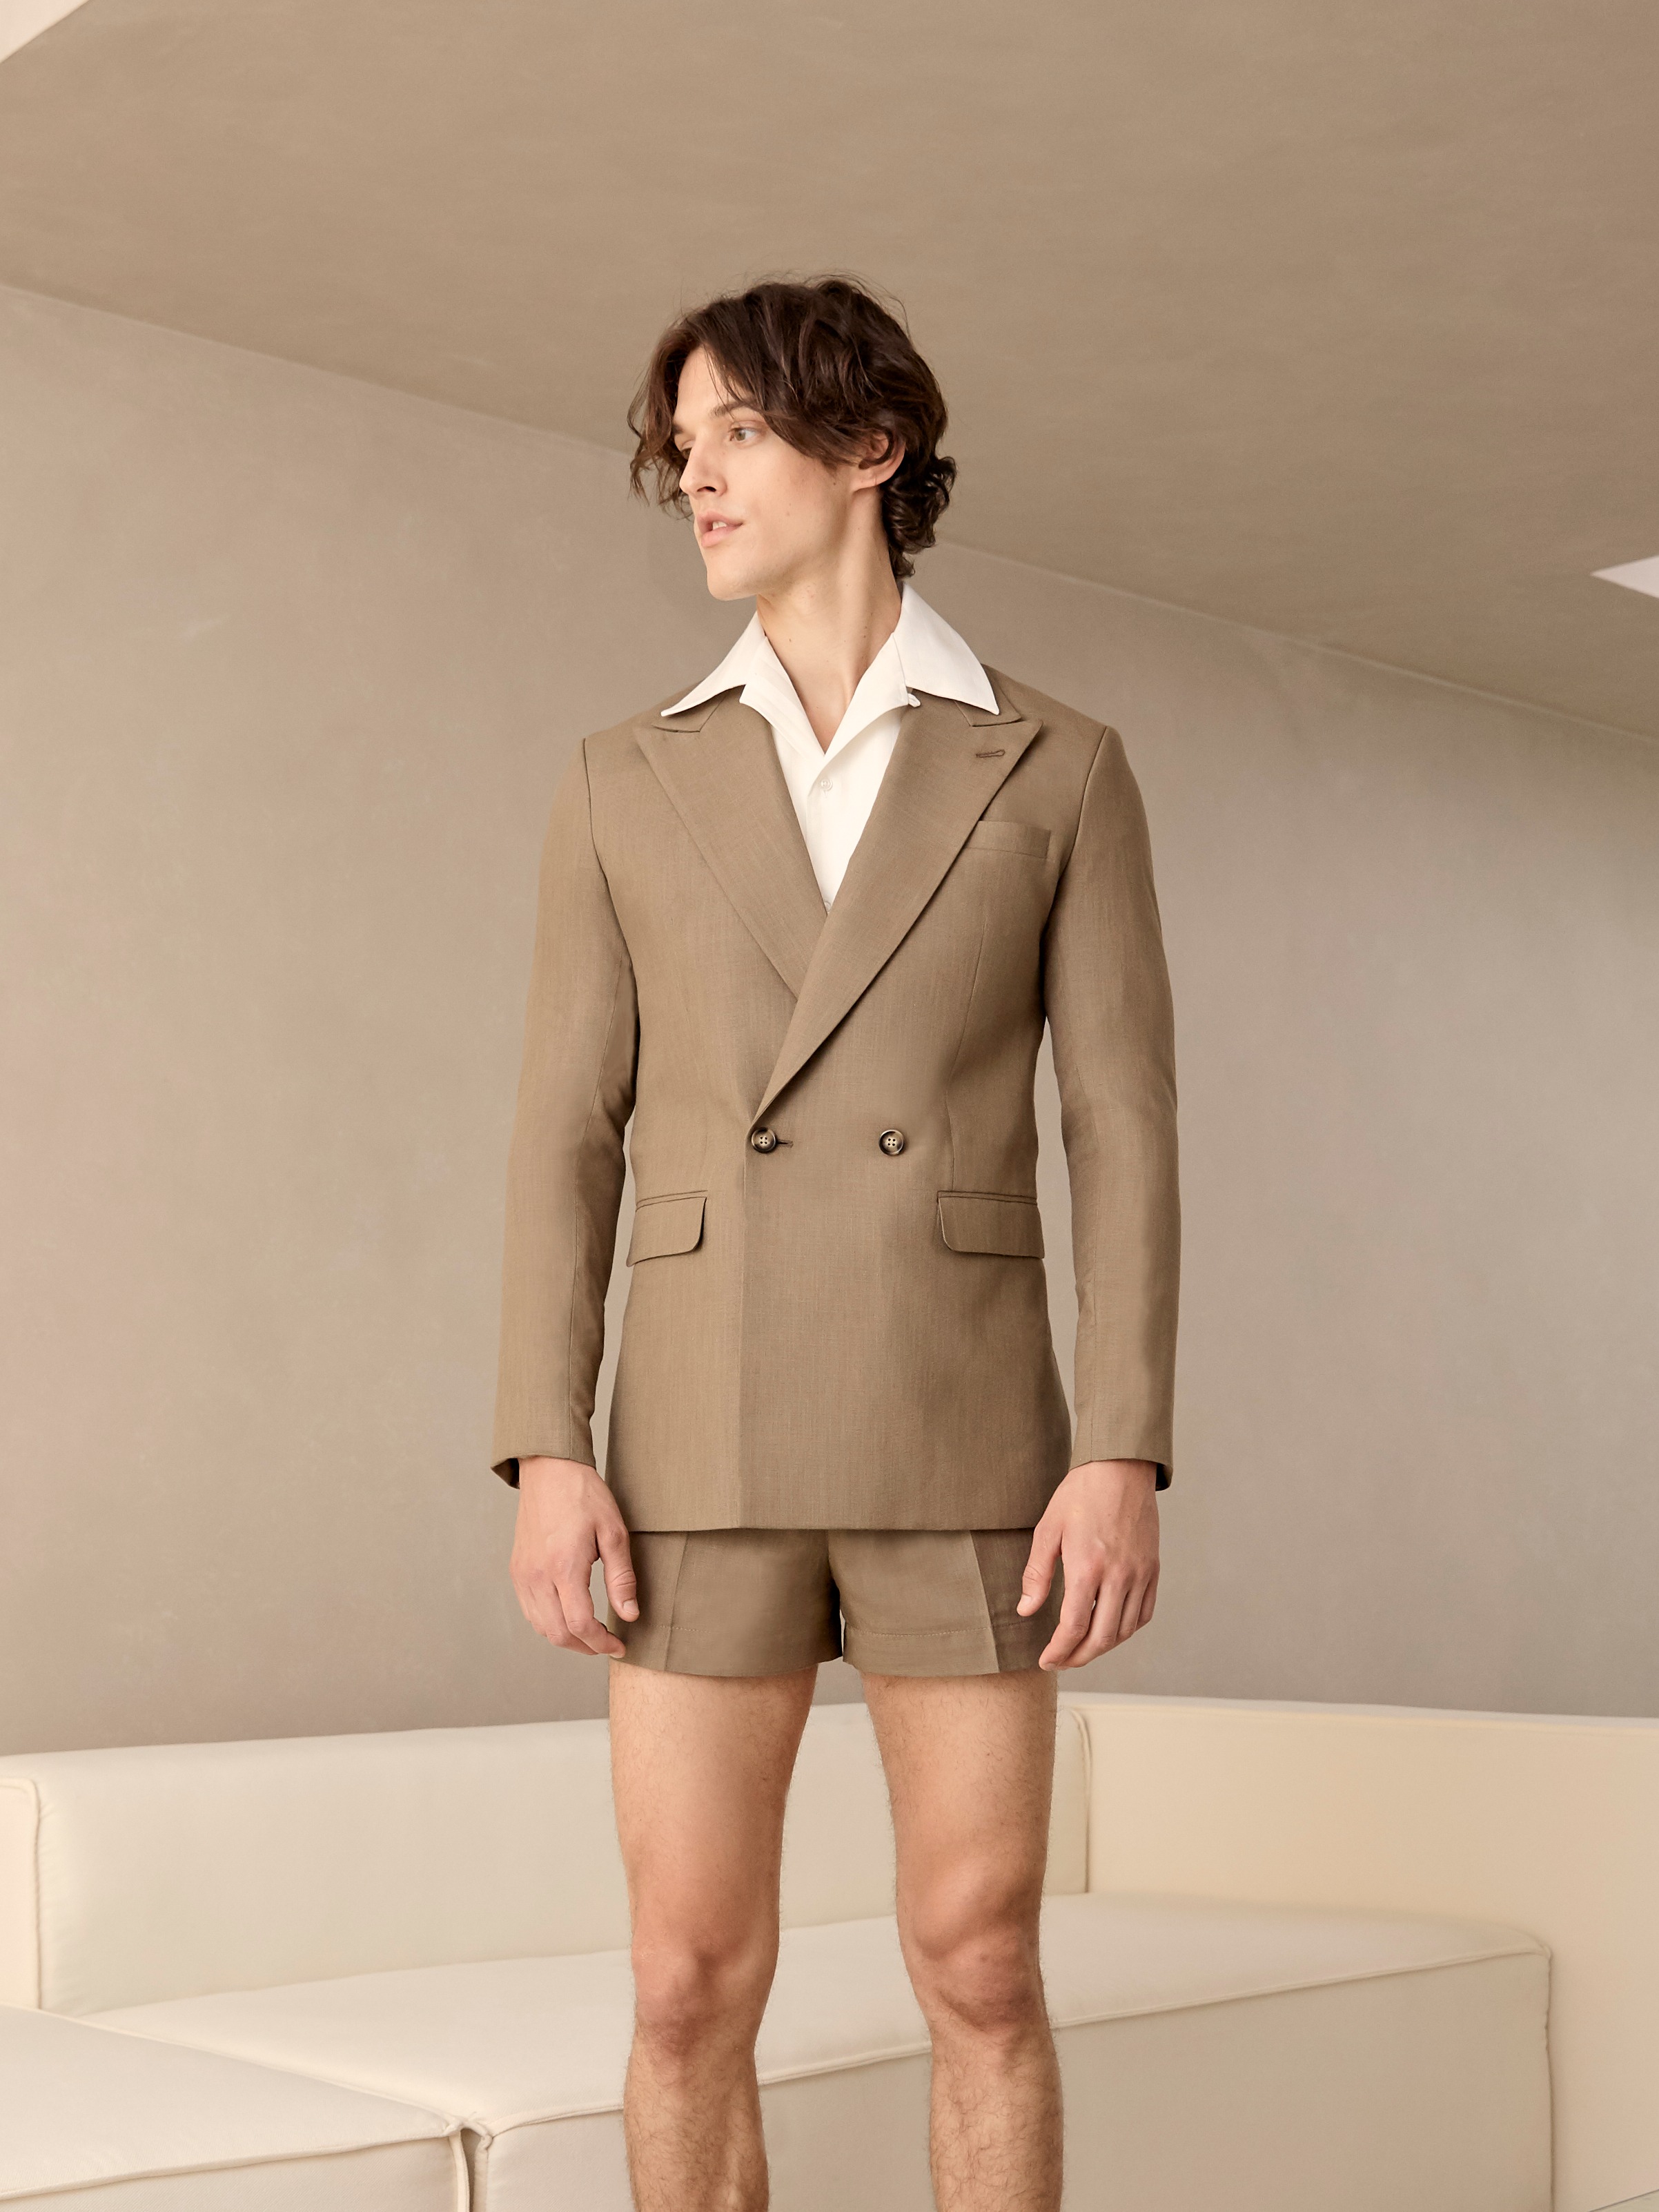 P.MITH - Brown Linen Suit Jacket